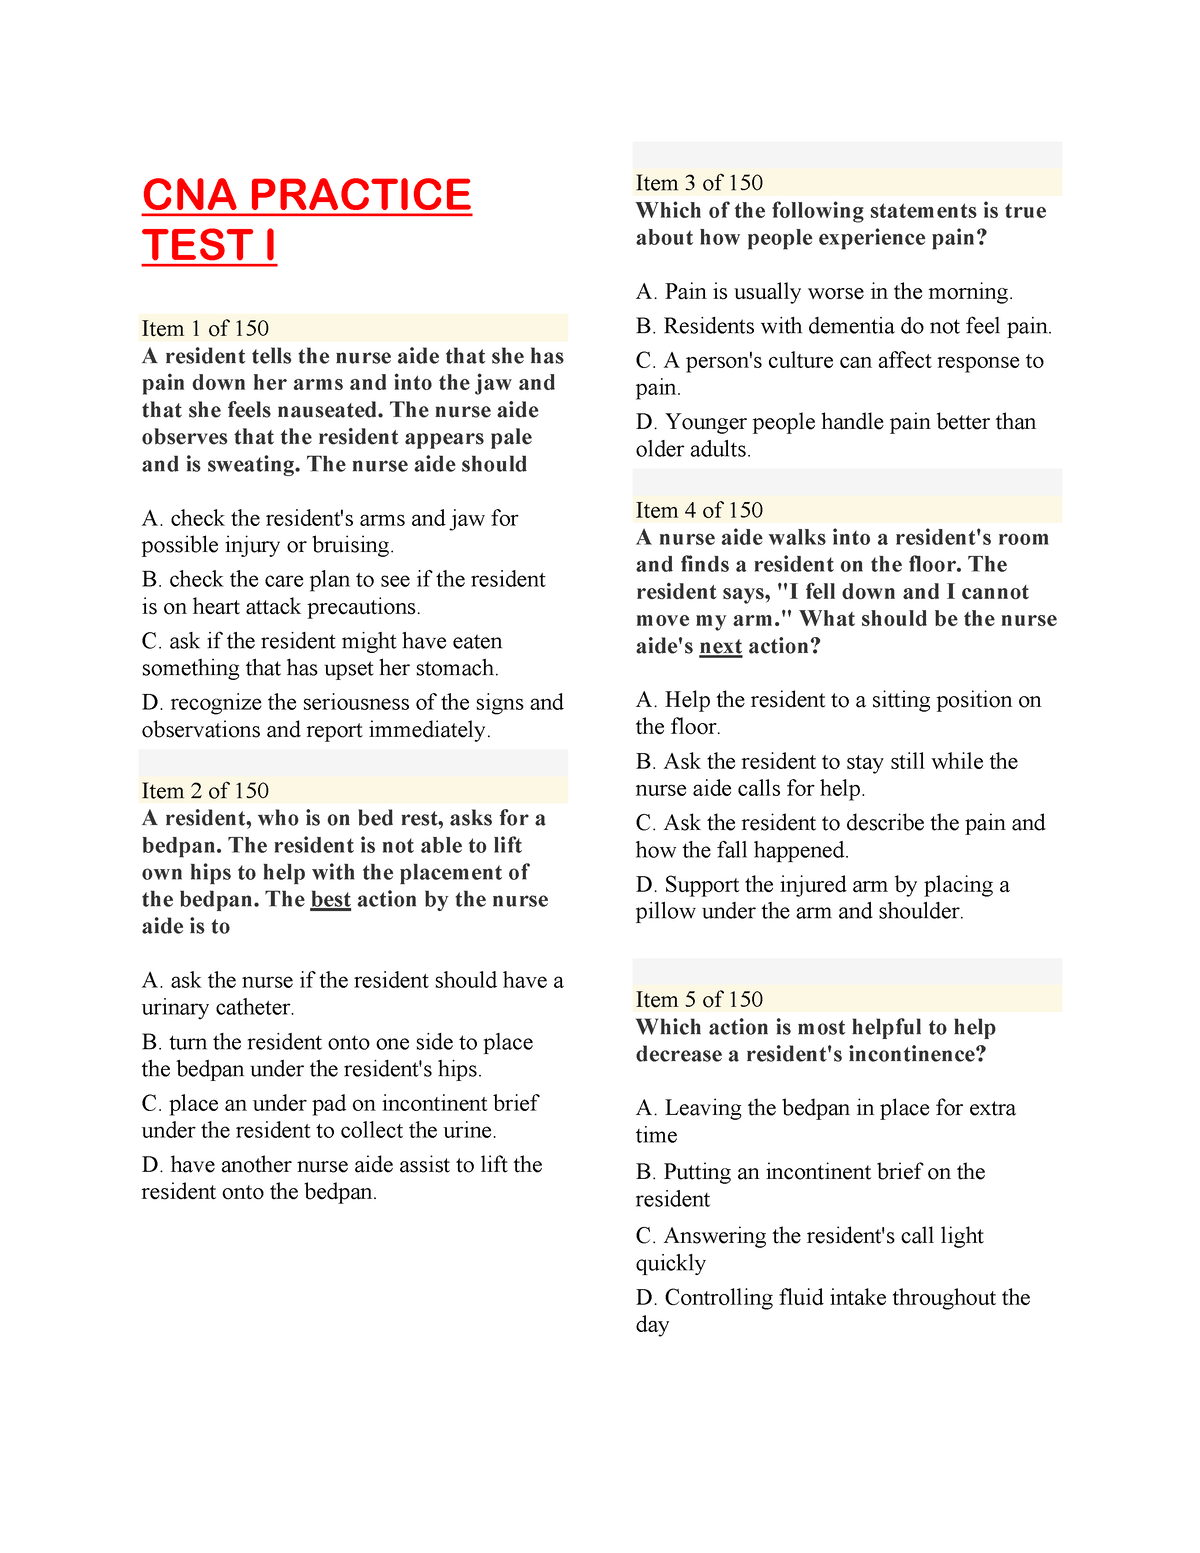 CNA Practice pdf 525+ Q&A CNA PRACTICE TEST I Item 1 of 150 A